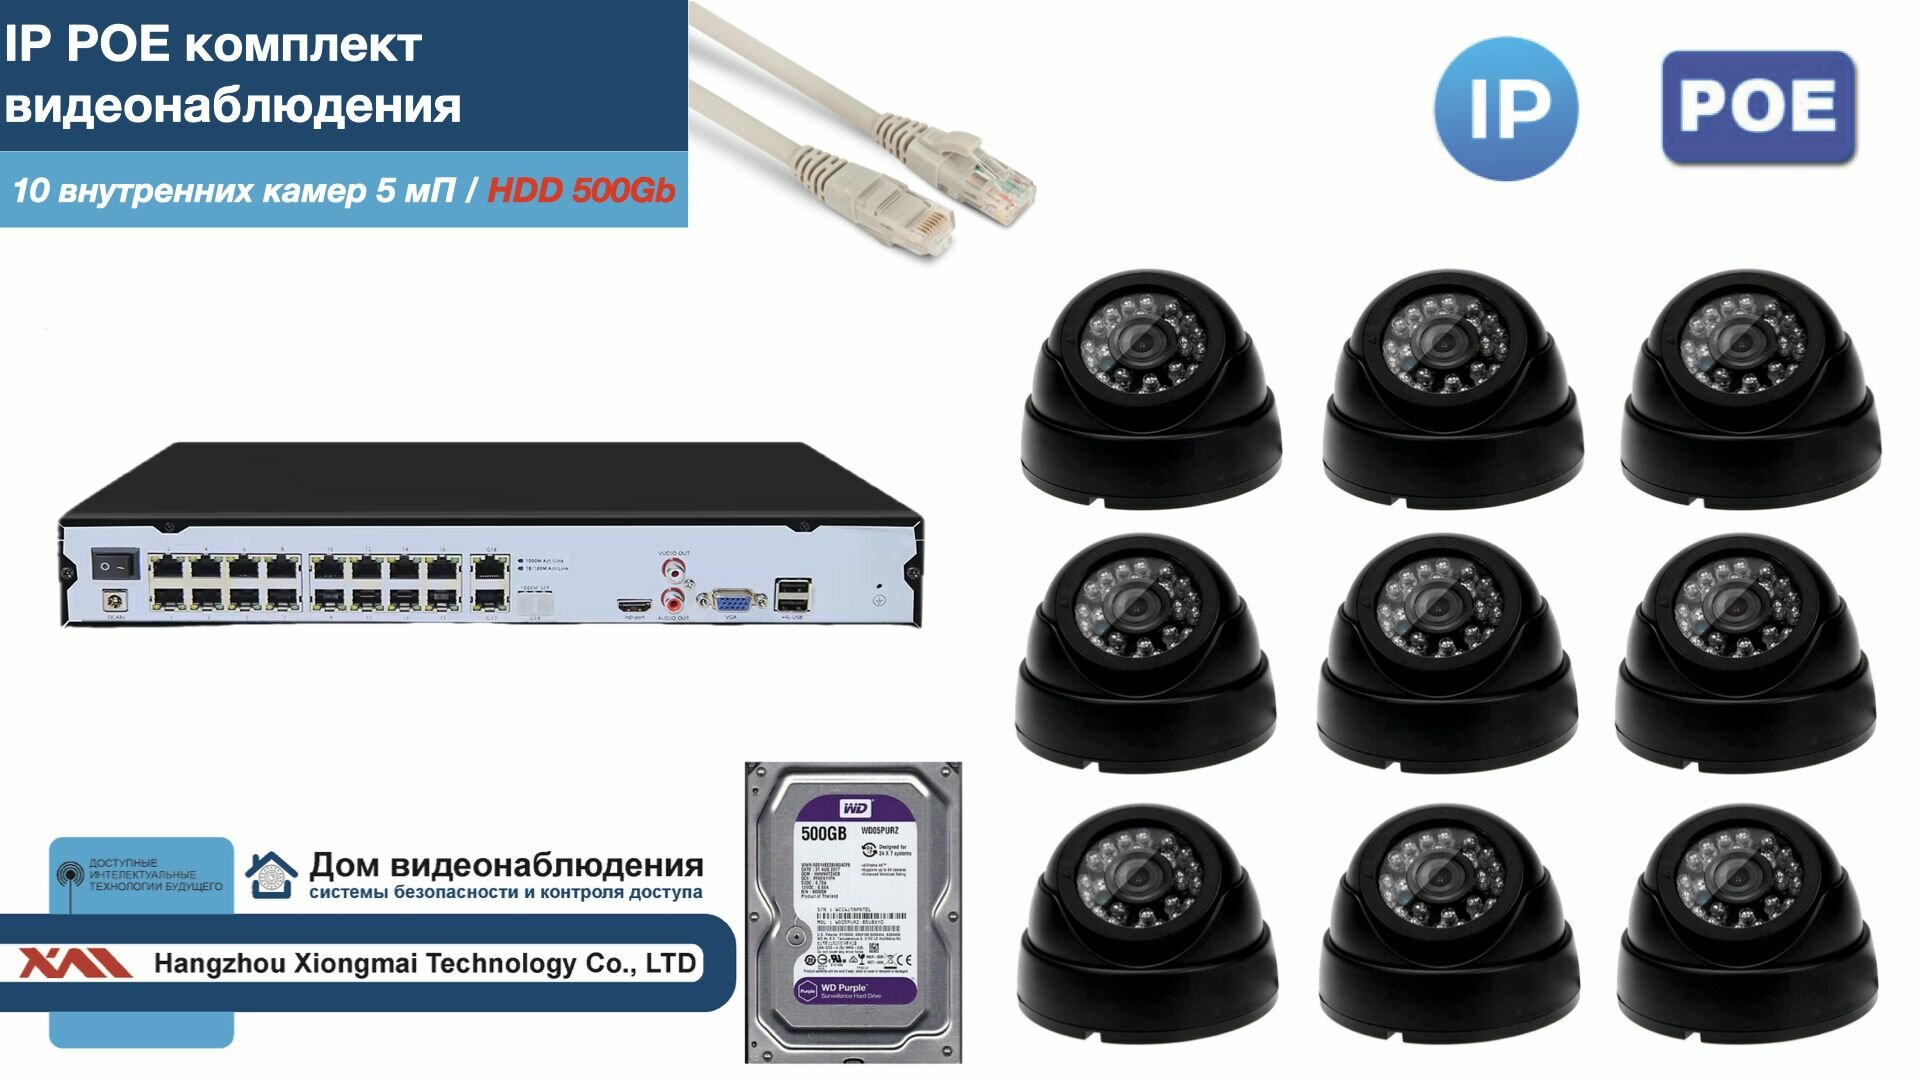 Полный IP POE комплект видеонаблюдения на 10 камер (KIT10IPPOE300B5MP-2-HDD500Gb)